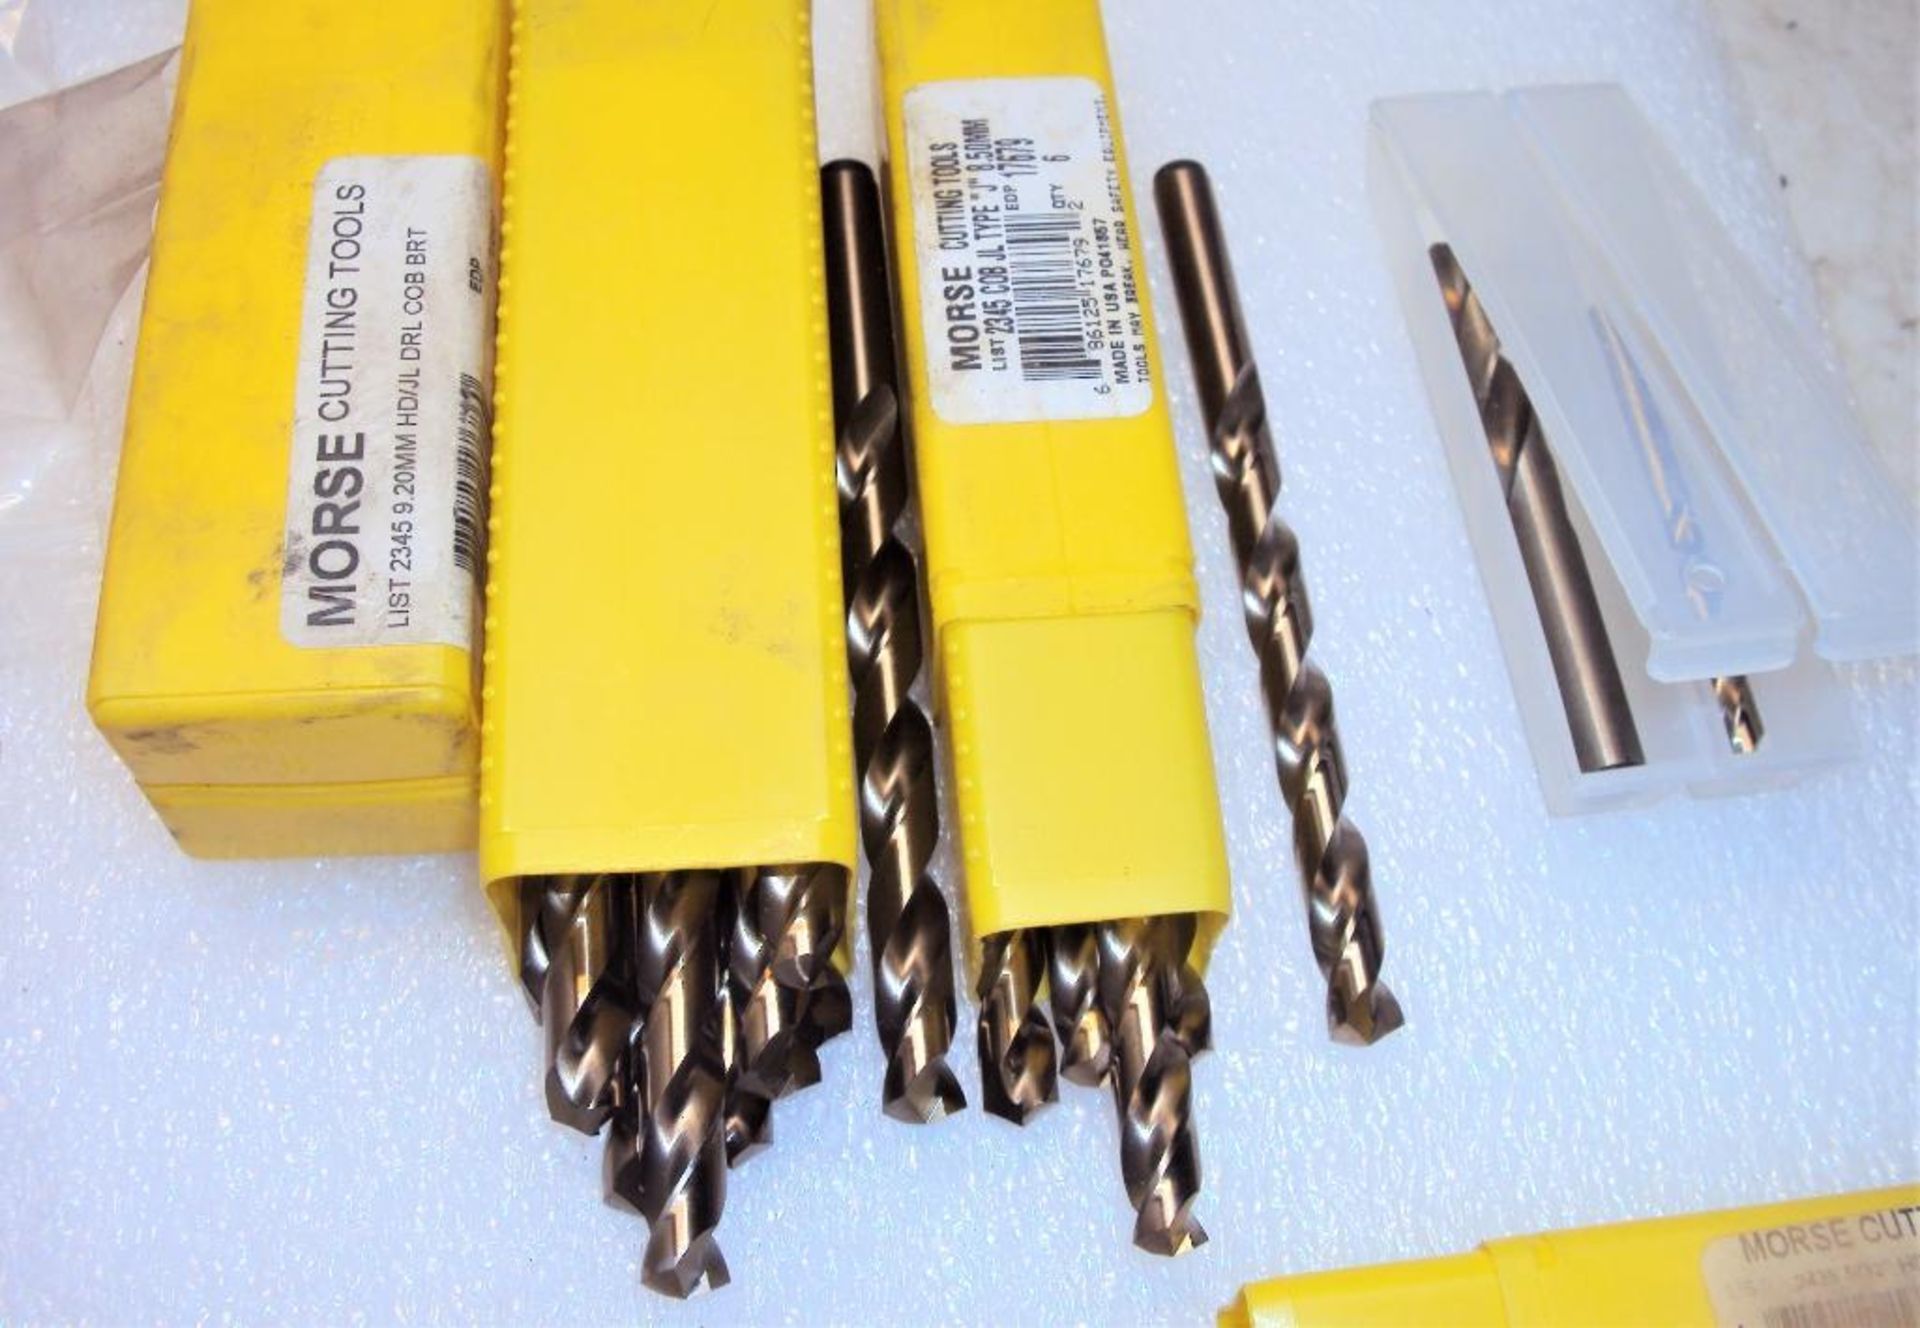 Packaged Milwaukee Cleveland & Morse Cobalt Jobber's Length Drill Bits - Image 6 of 6